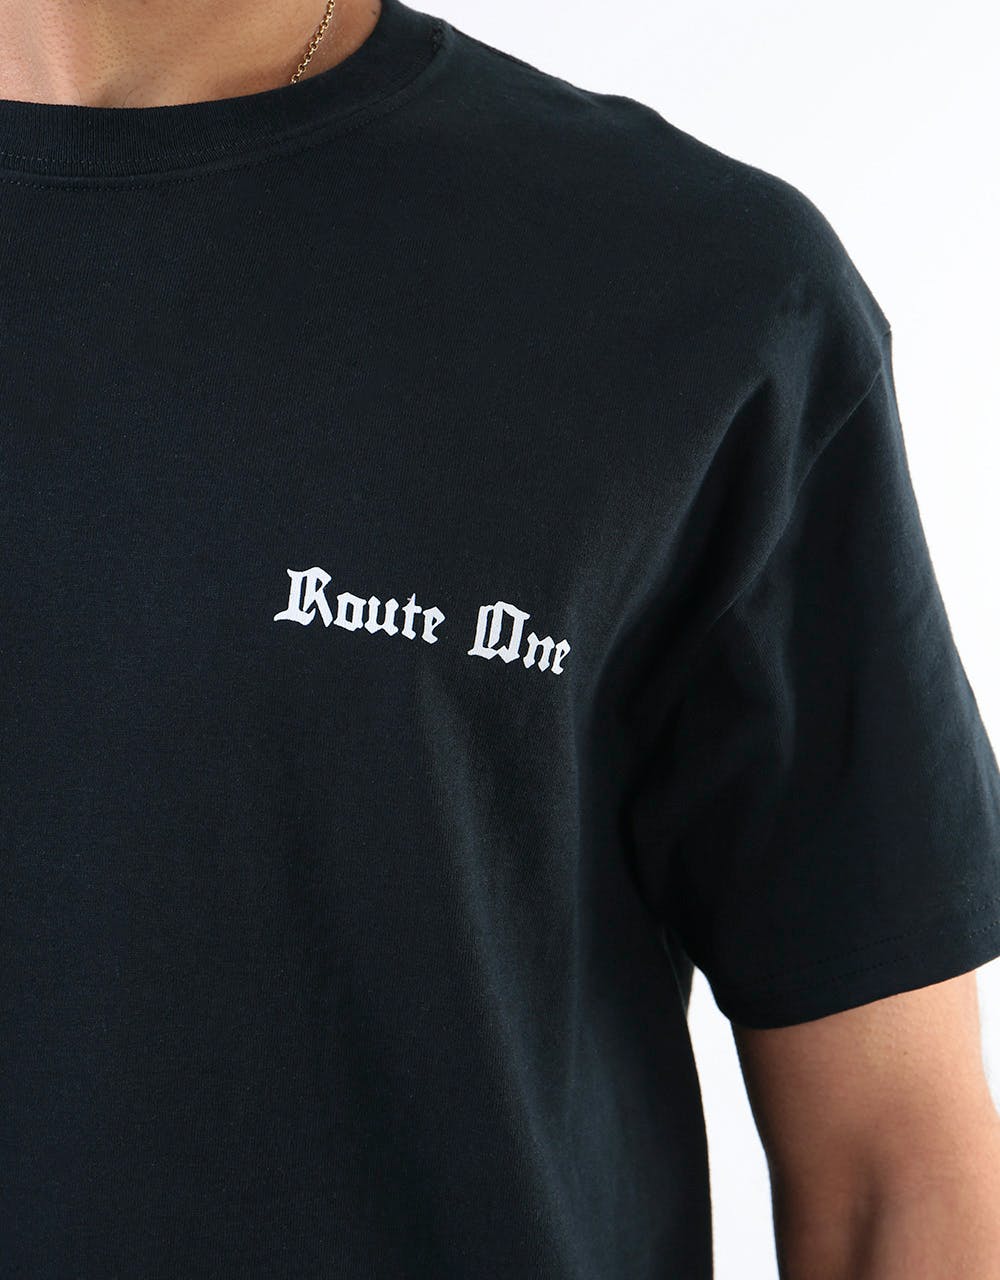 Route One Holofernes T-Shirt - Black